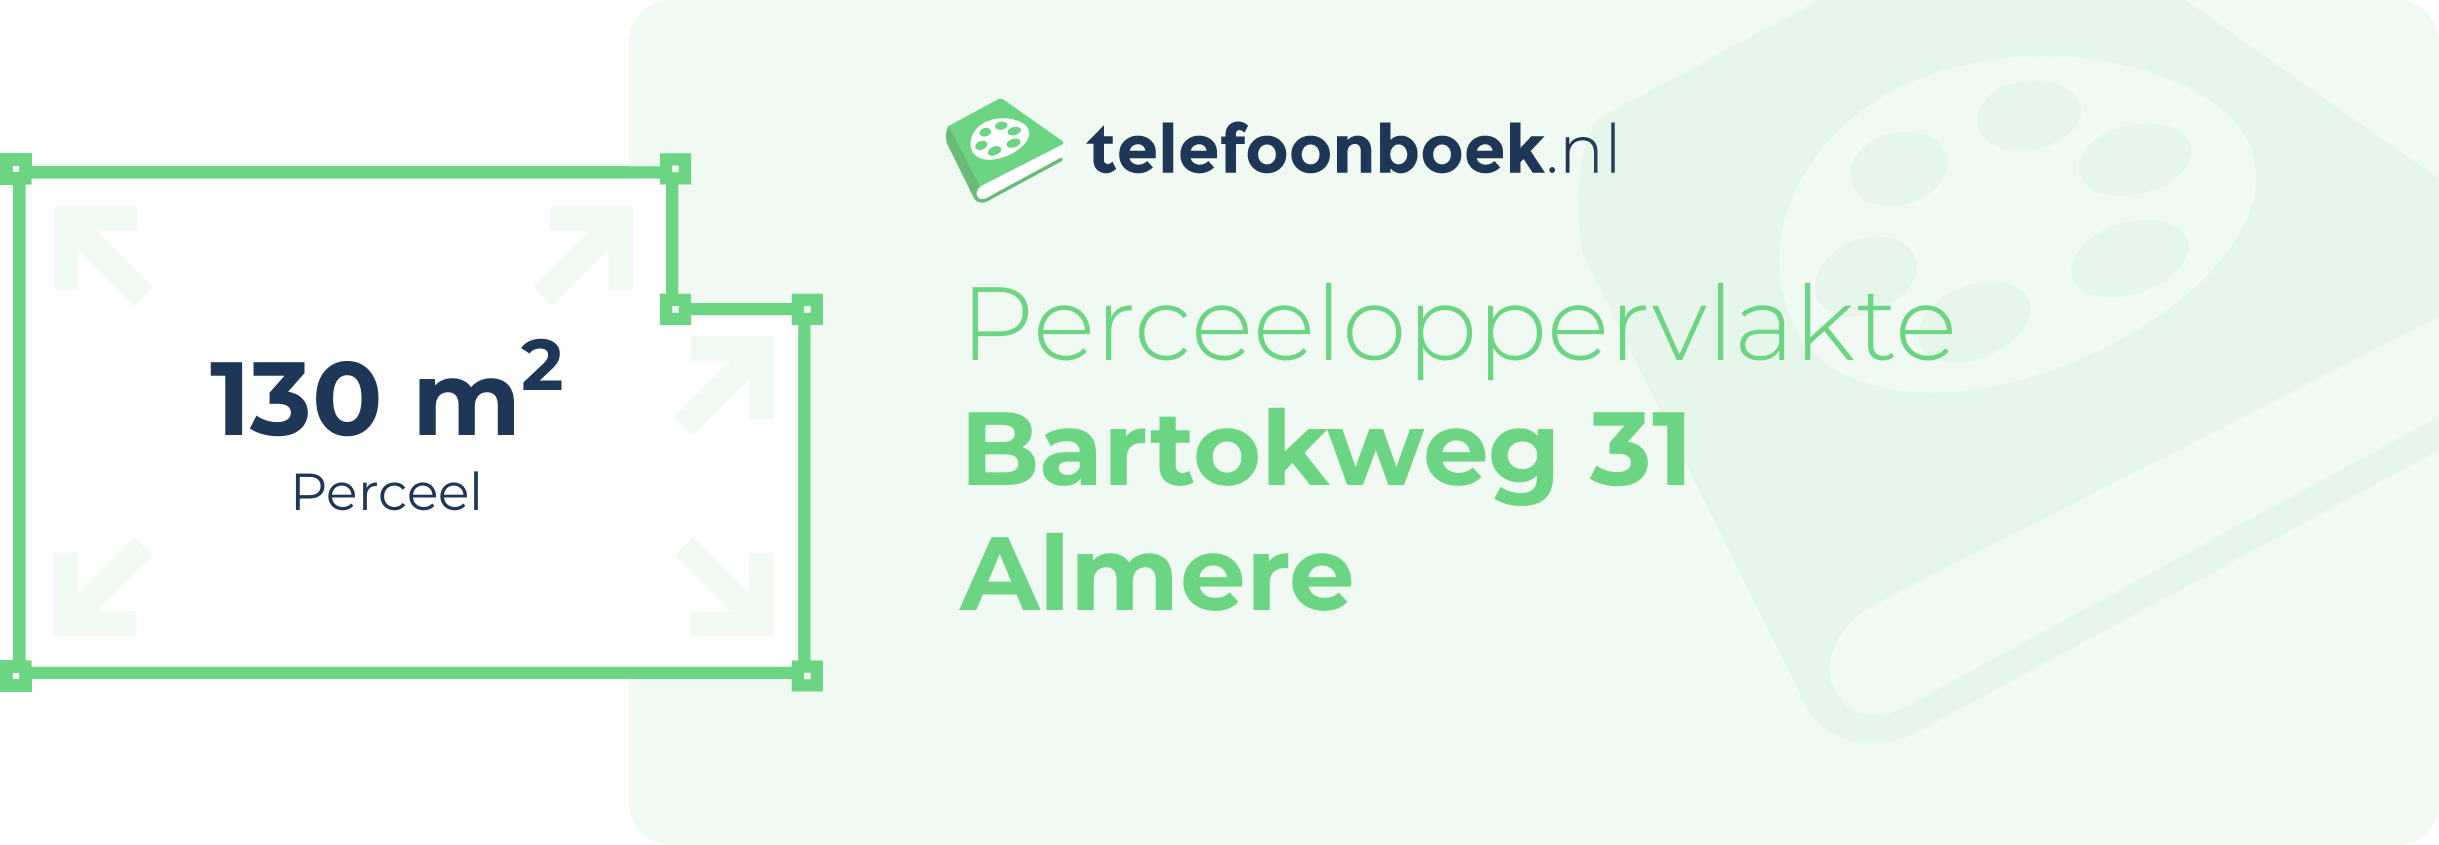 Perceeloppervlakte Bartokweg 31 Almere